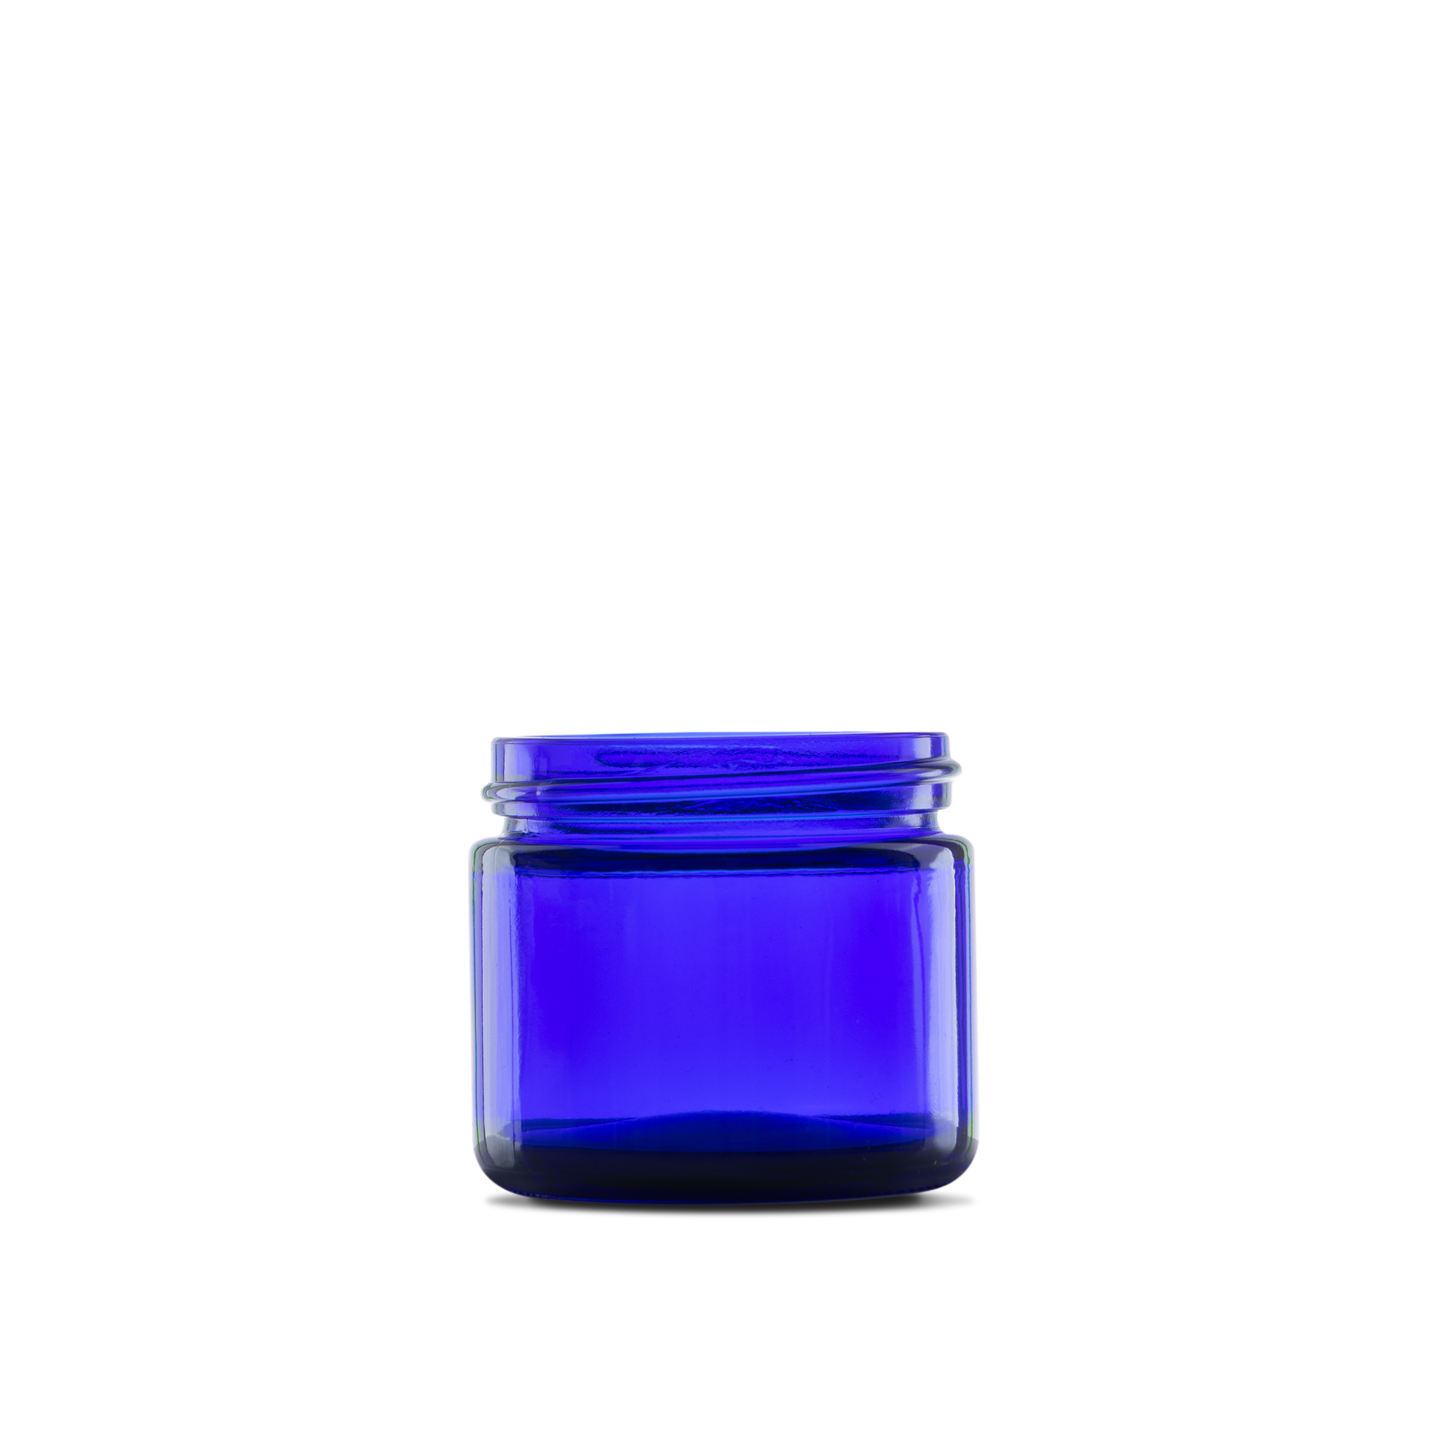 2 oz Blue Glass Straight-Sided Round Jar 53-400 Neck Finish